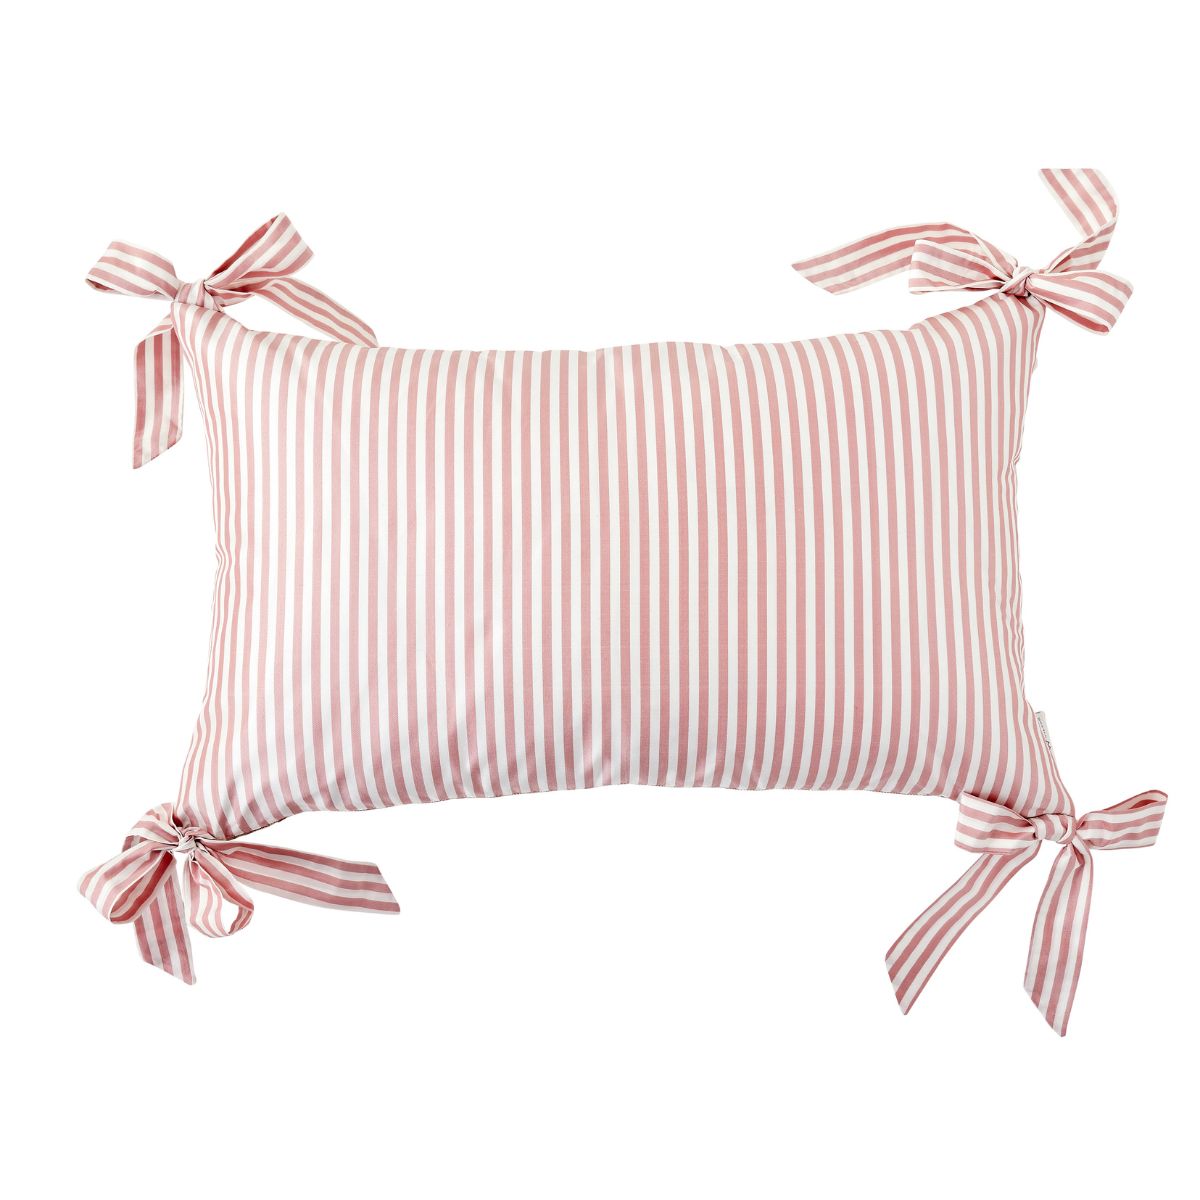 Noelle Bow Pillow in Blush